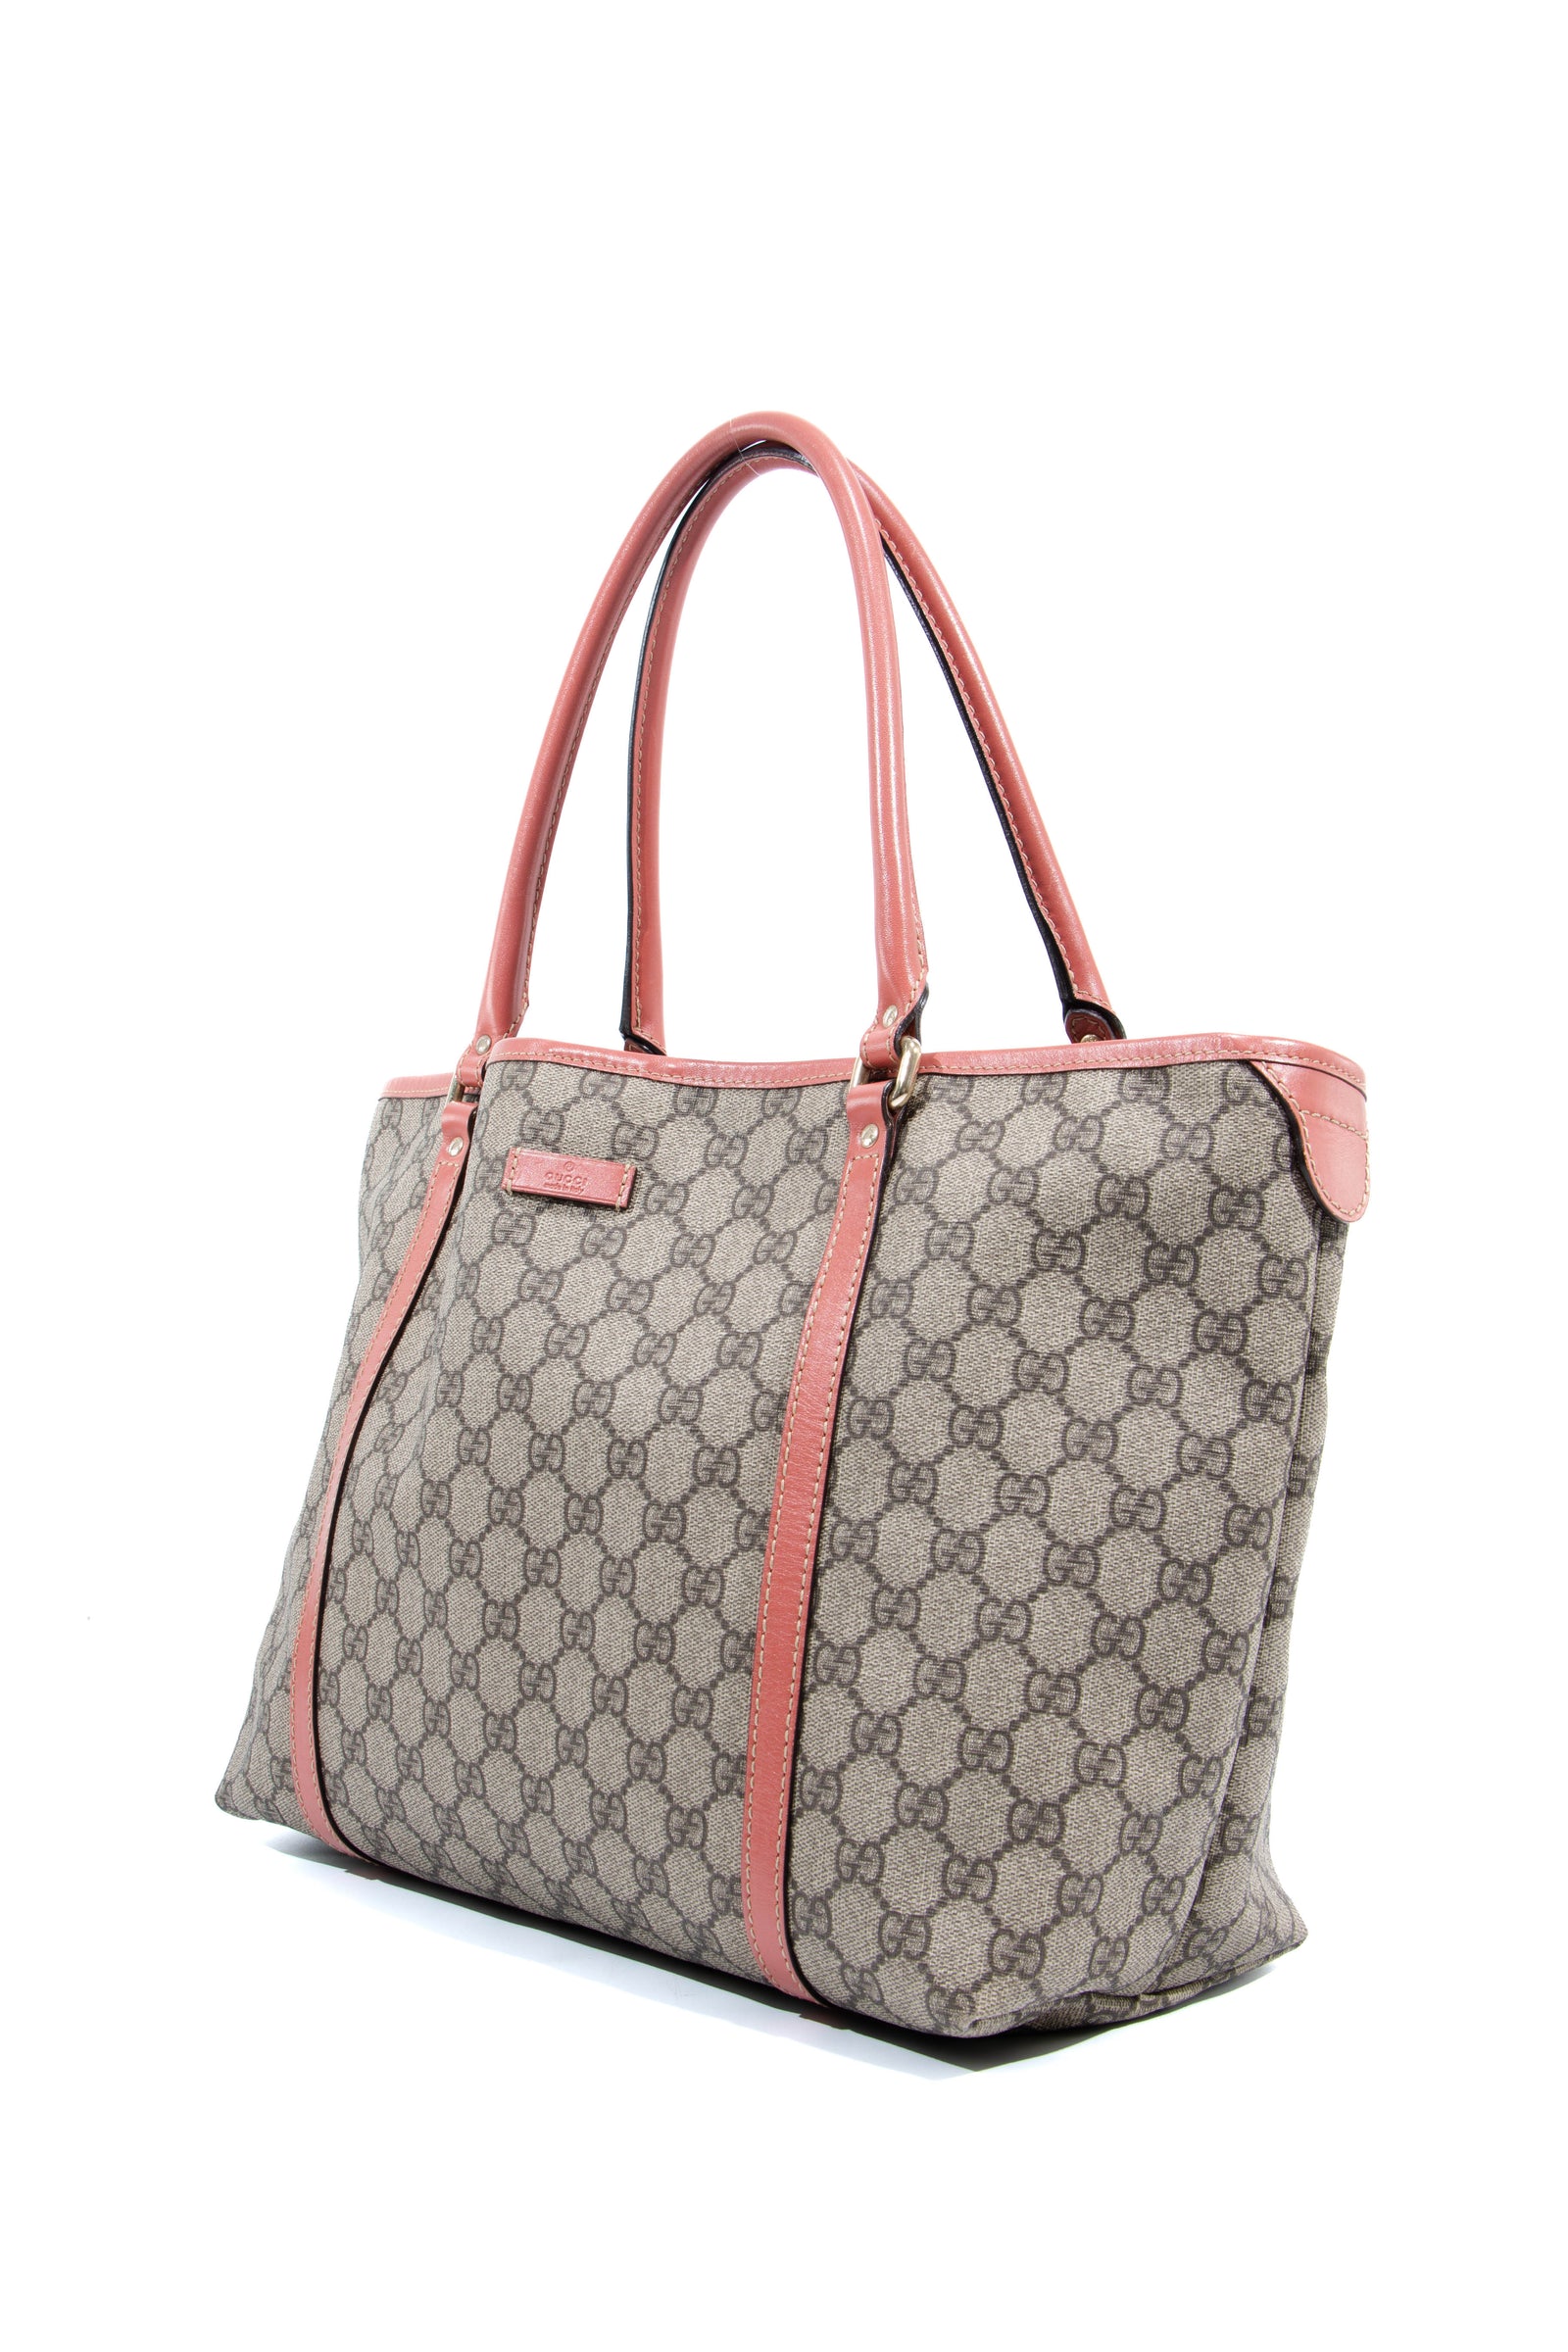 Gucci Boat Pochette  Pink gucci purse, Bags, Fancy bags